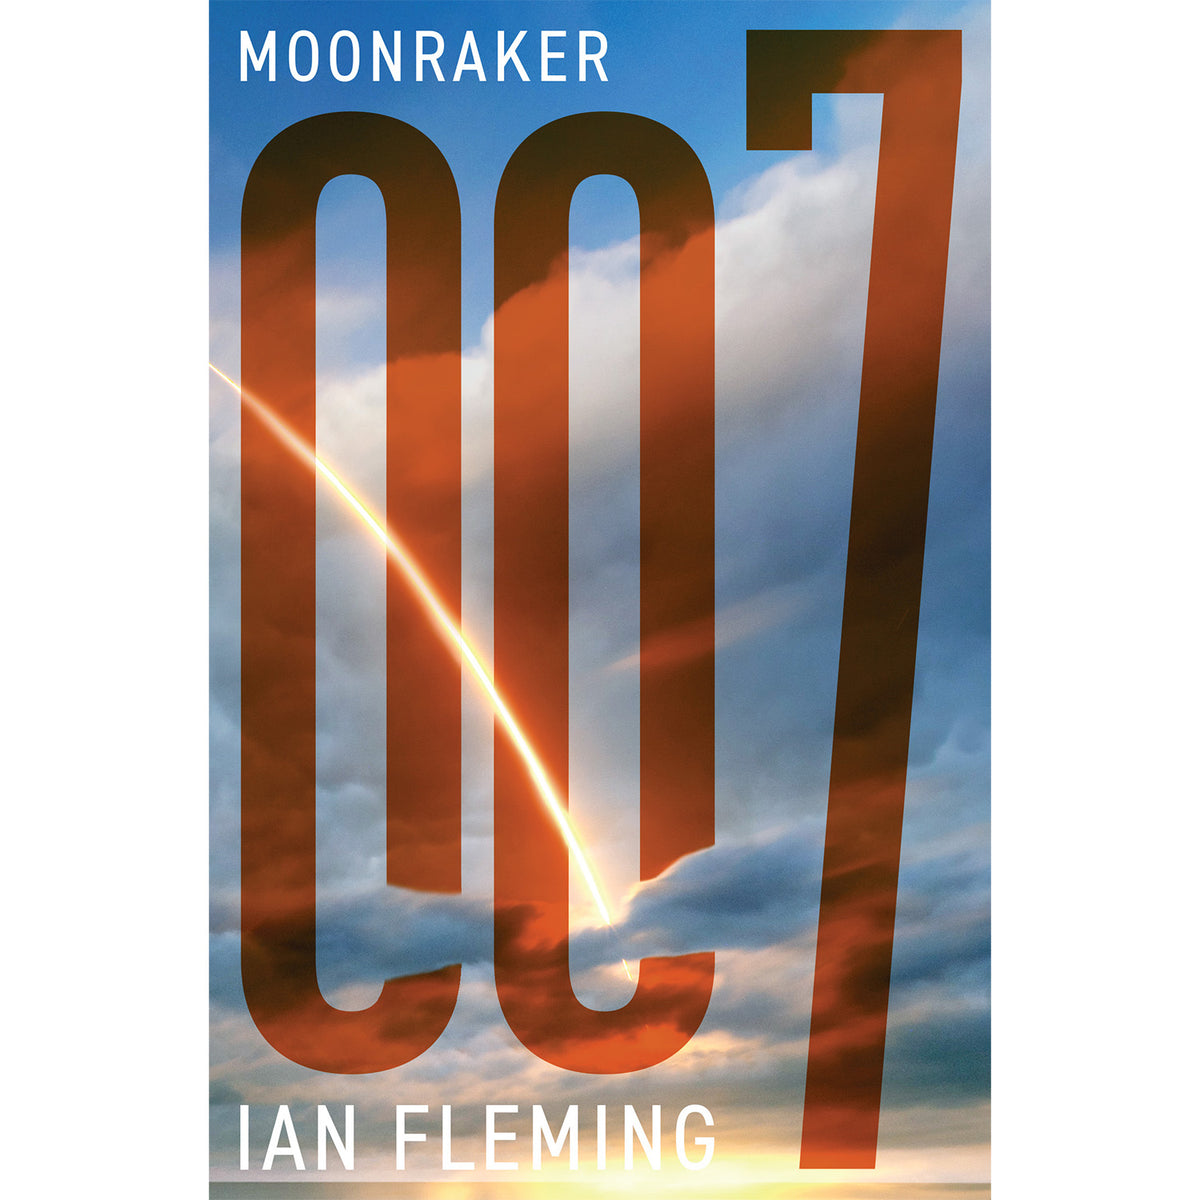 James Bond Moonraker Book - By Ian Fleming